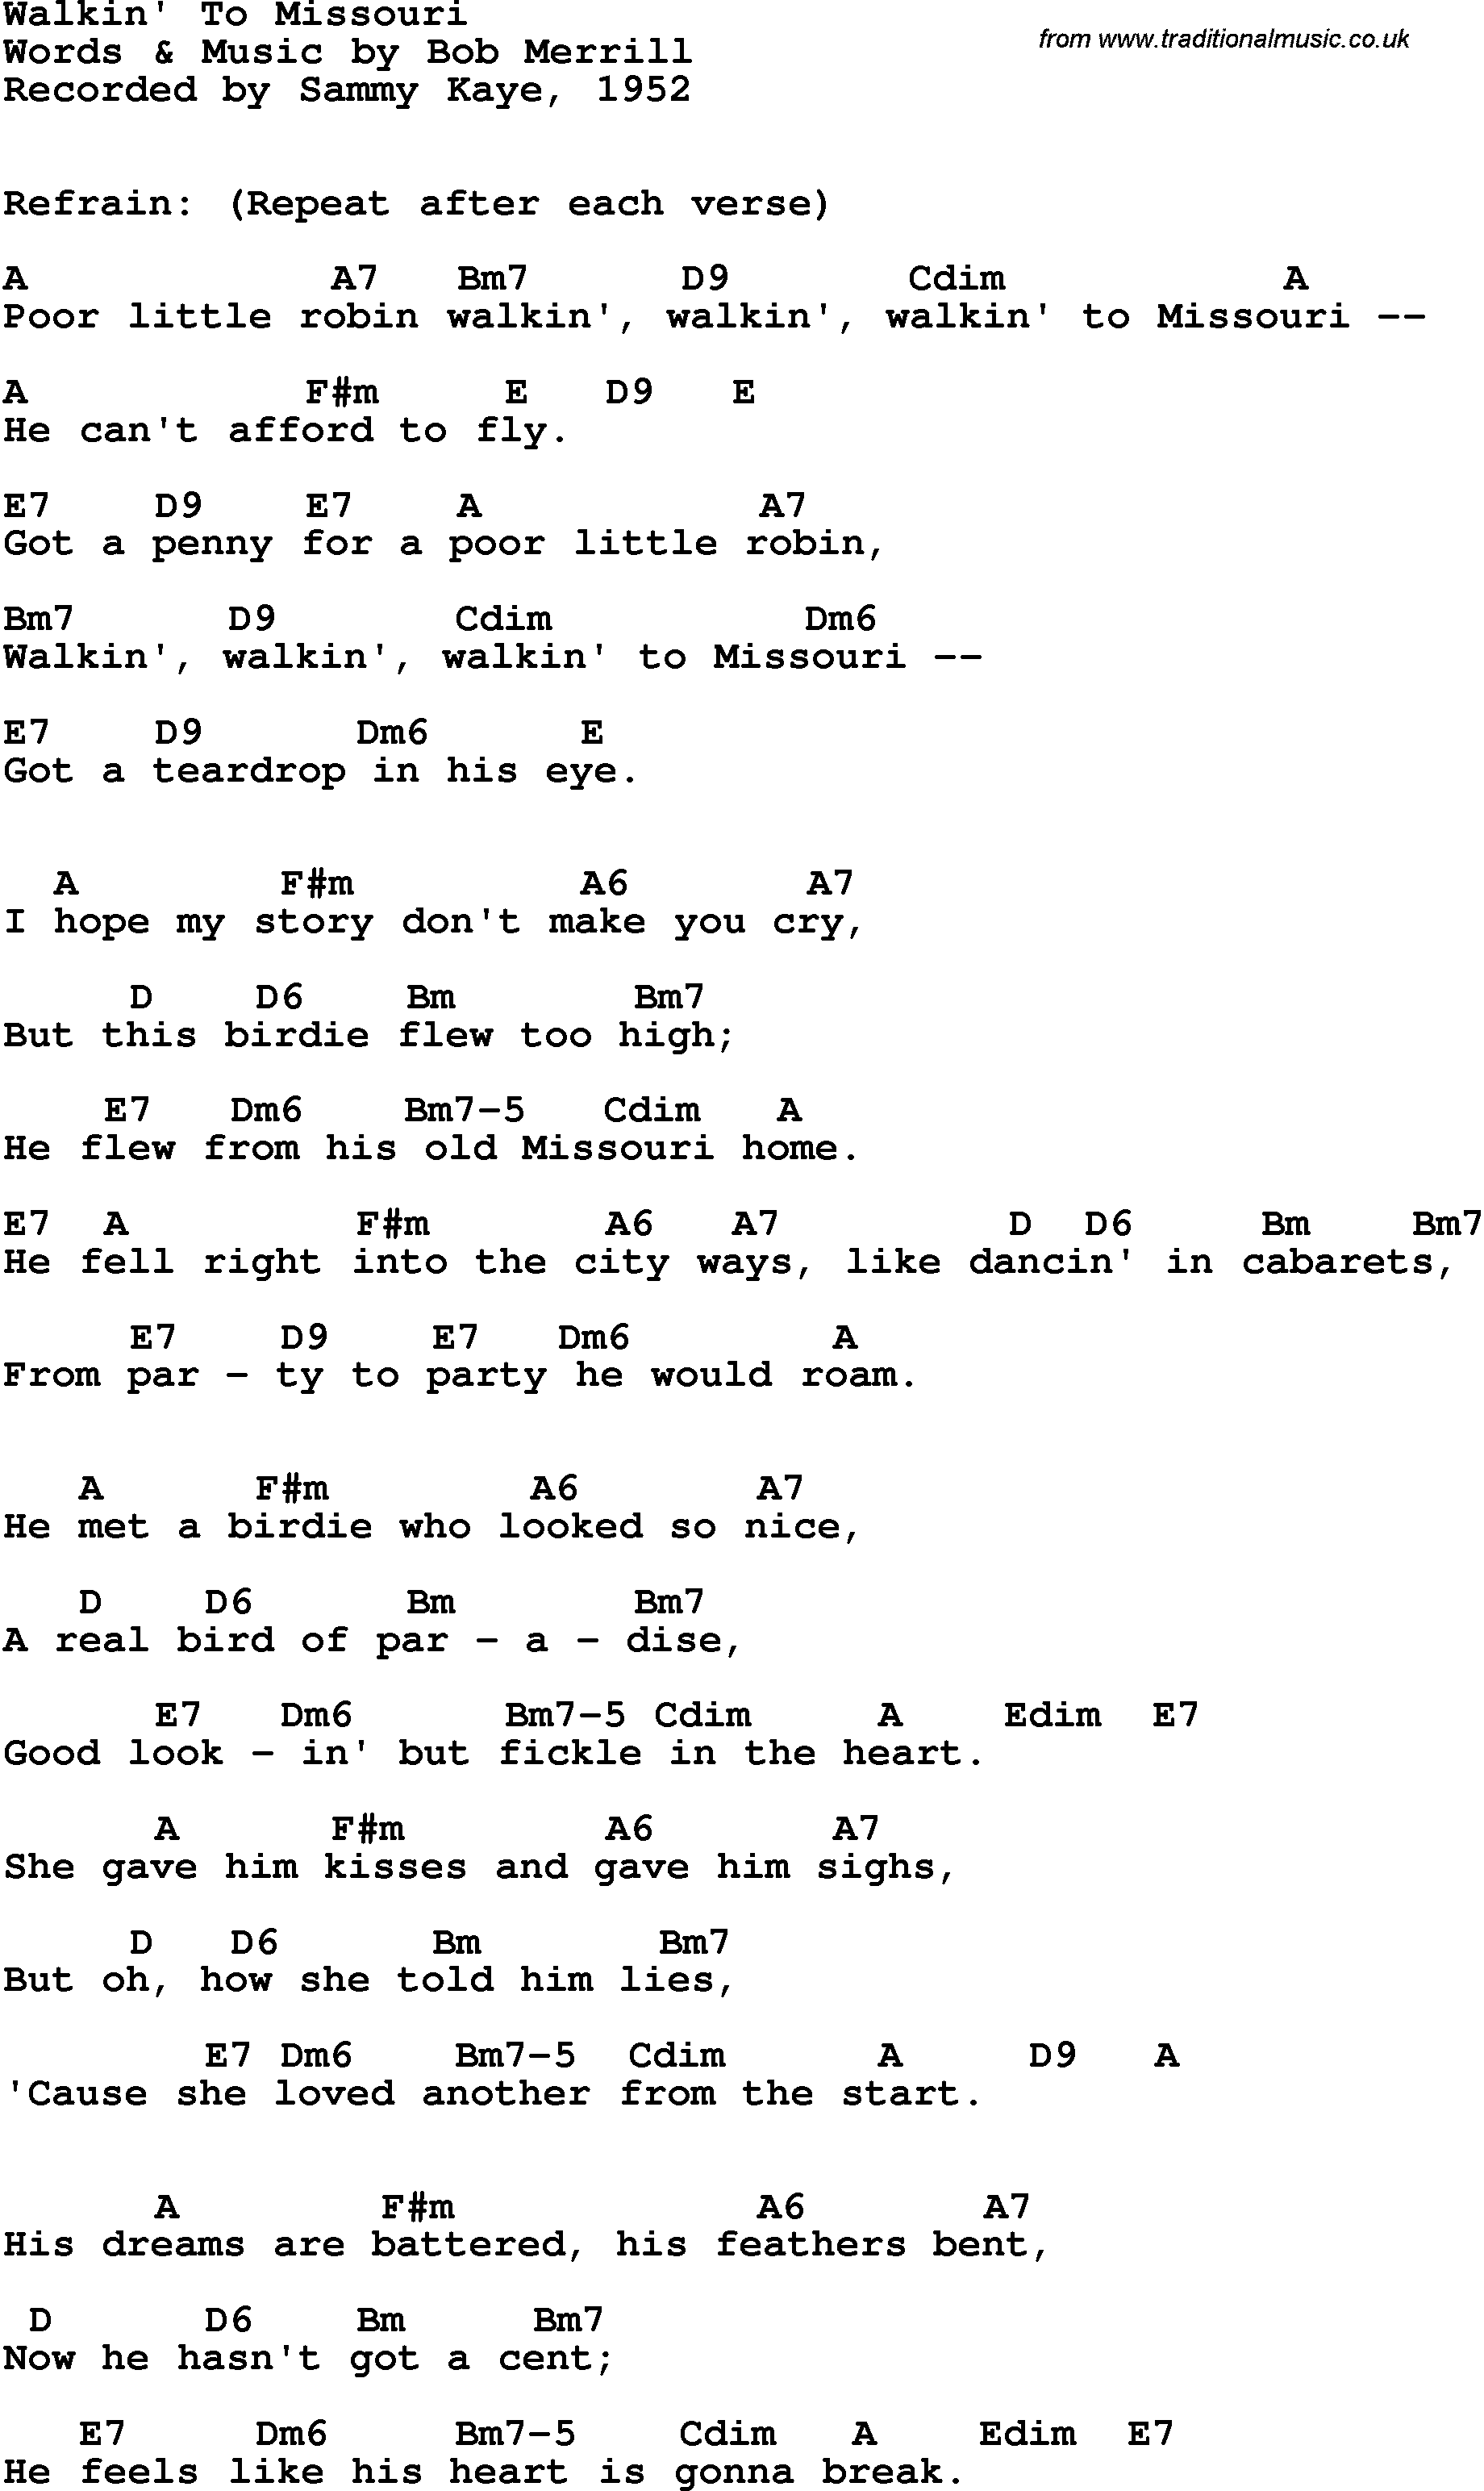 Song Lyrics with guitar chords for Walkin' To Missouri - Sammy Kaye, 1952